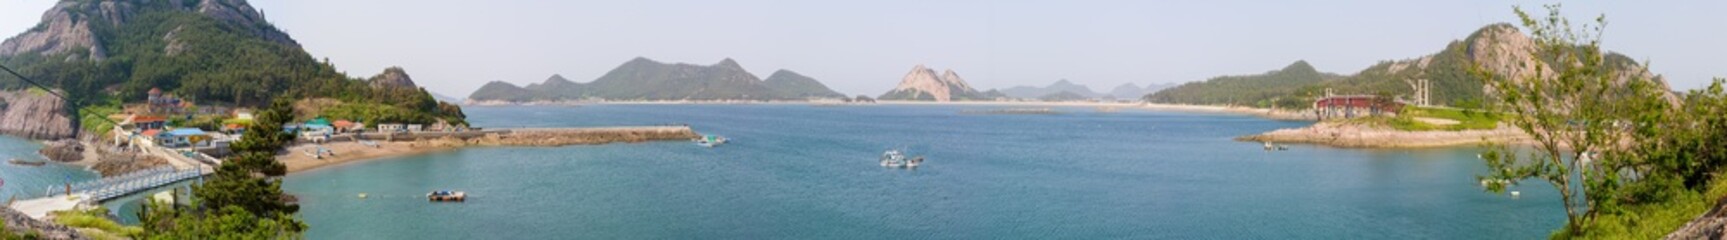 Very wide high definition panorama of Seonyudo Island, with fishing boats in Jeongjado bay, South Korea